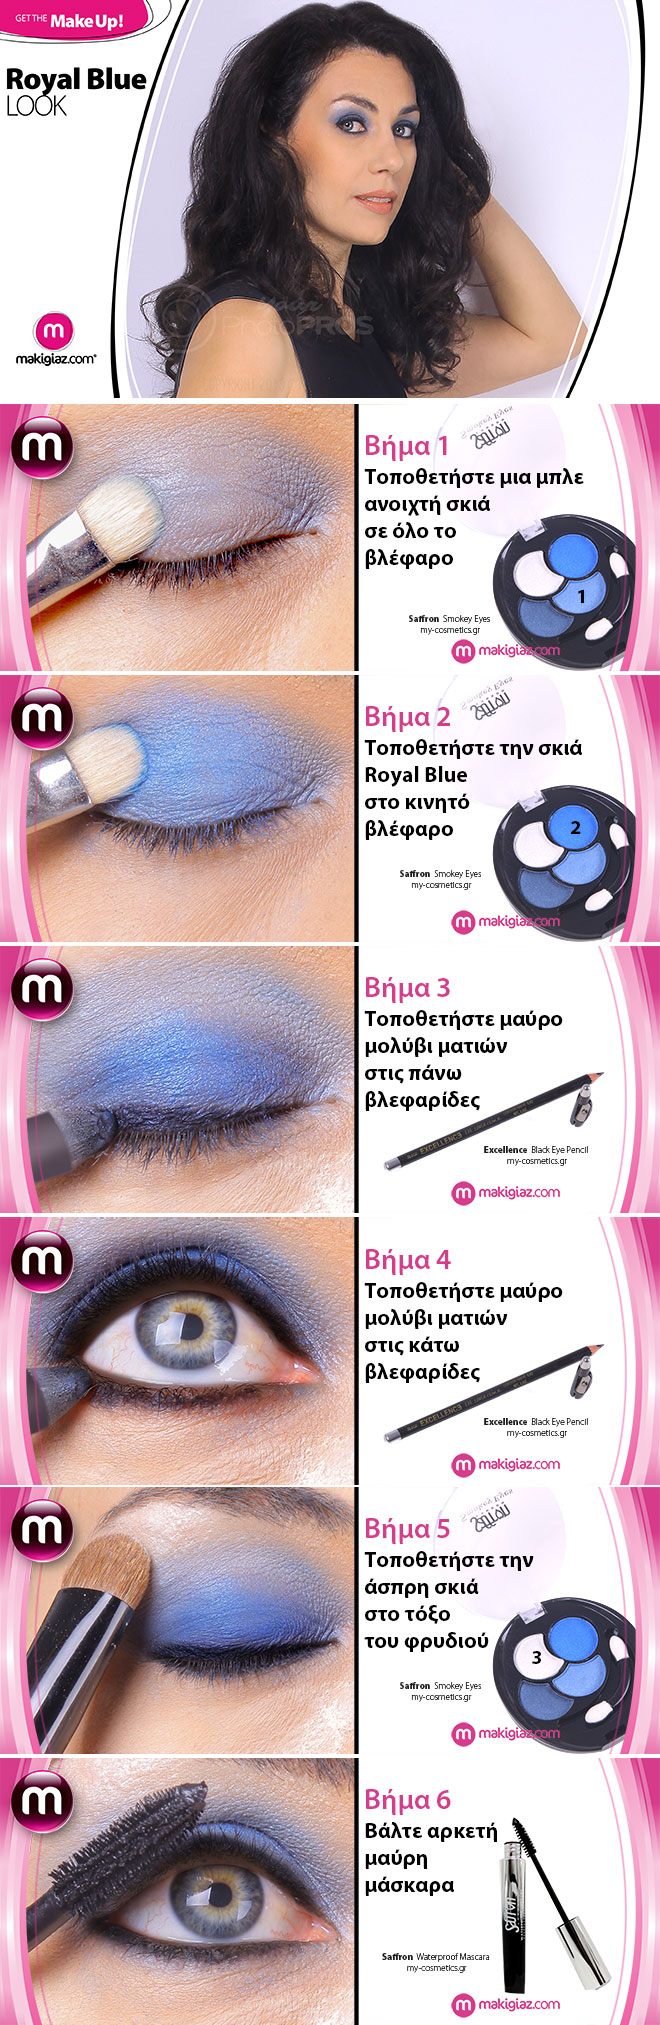 Get The Makeup - Royal Blue - Makigiaz Com - Μακιγιάζ